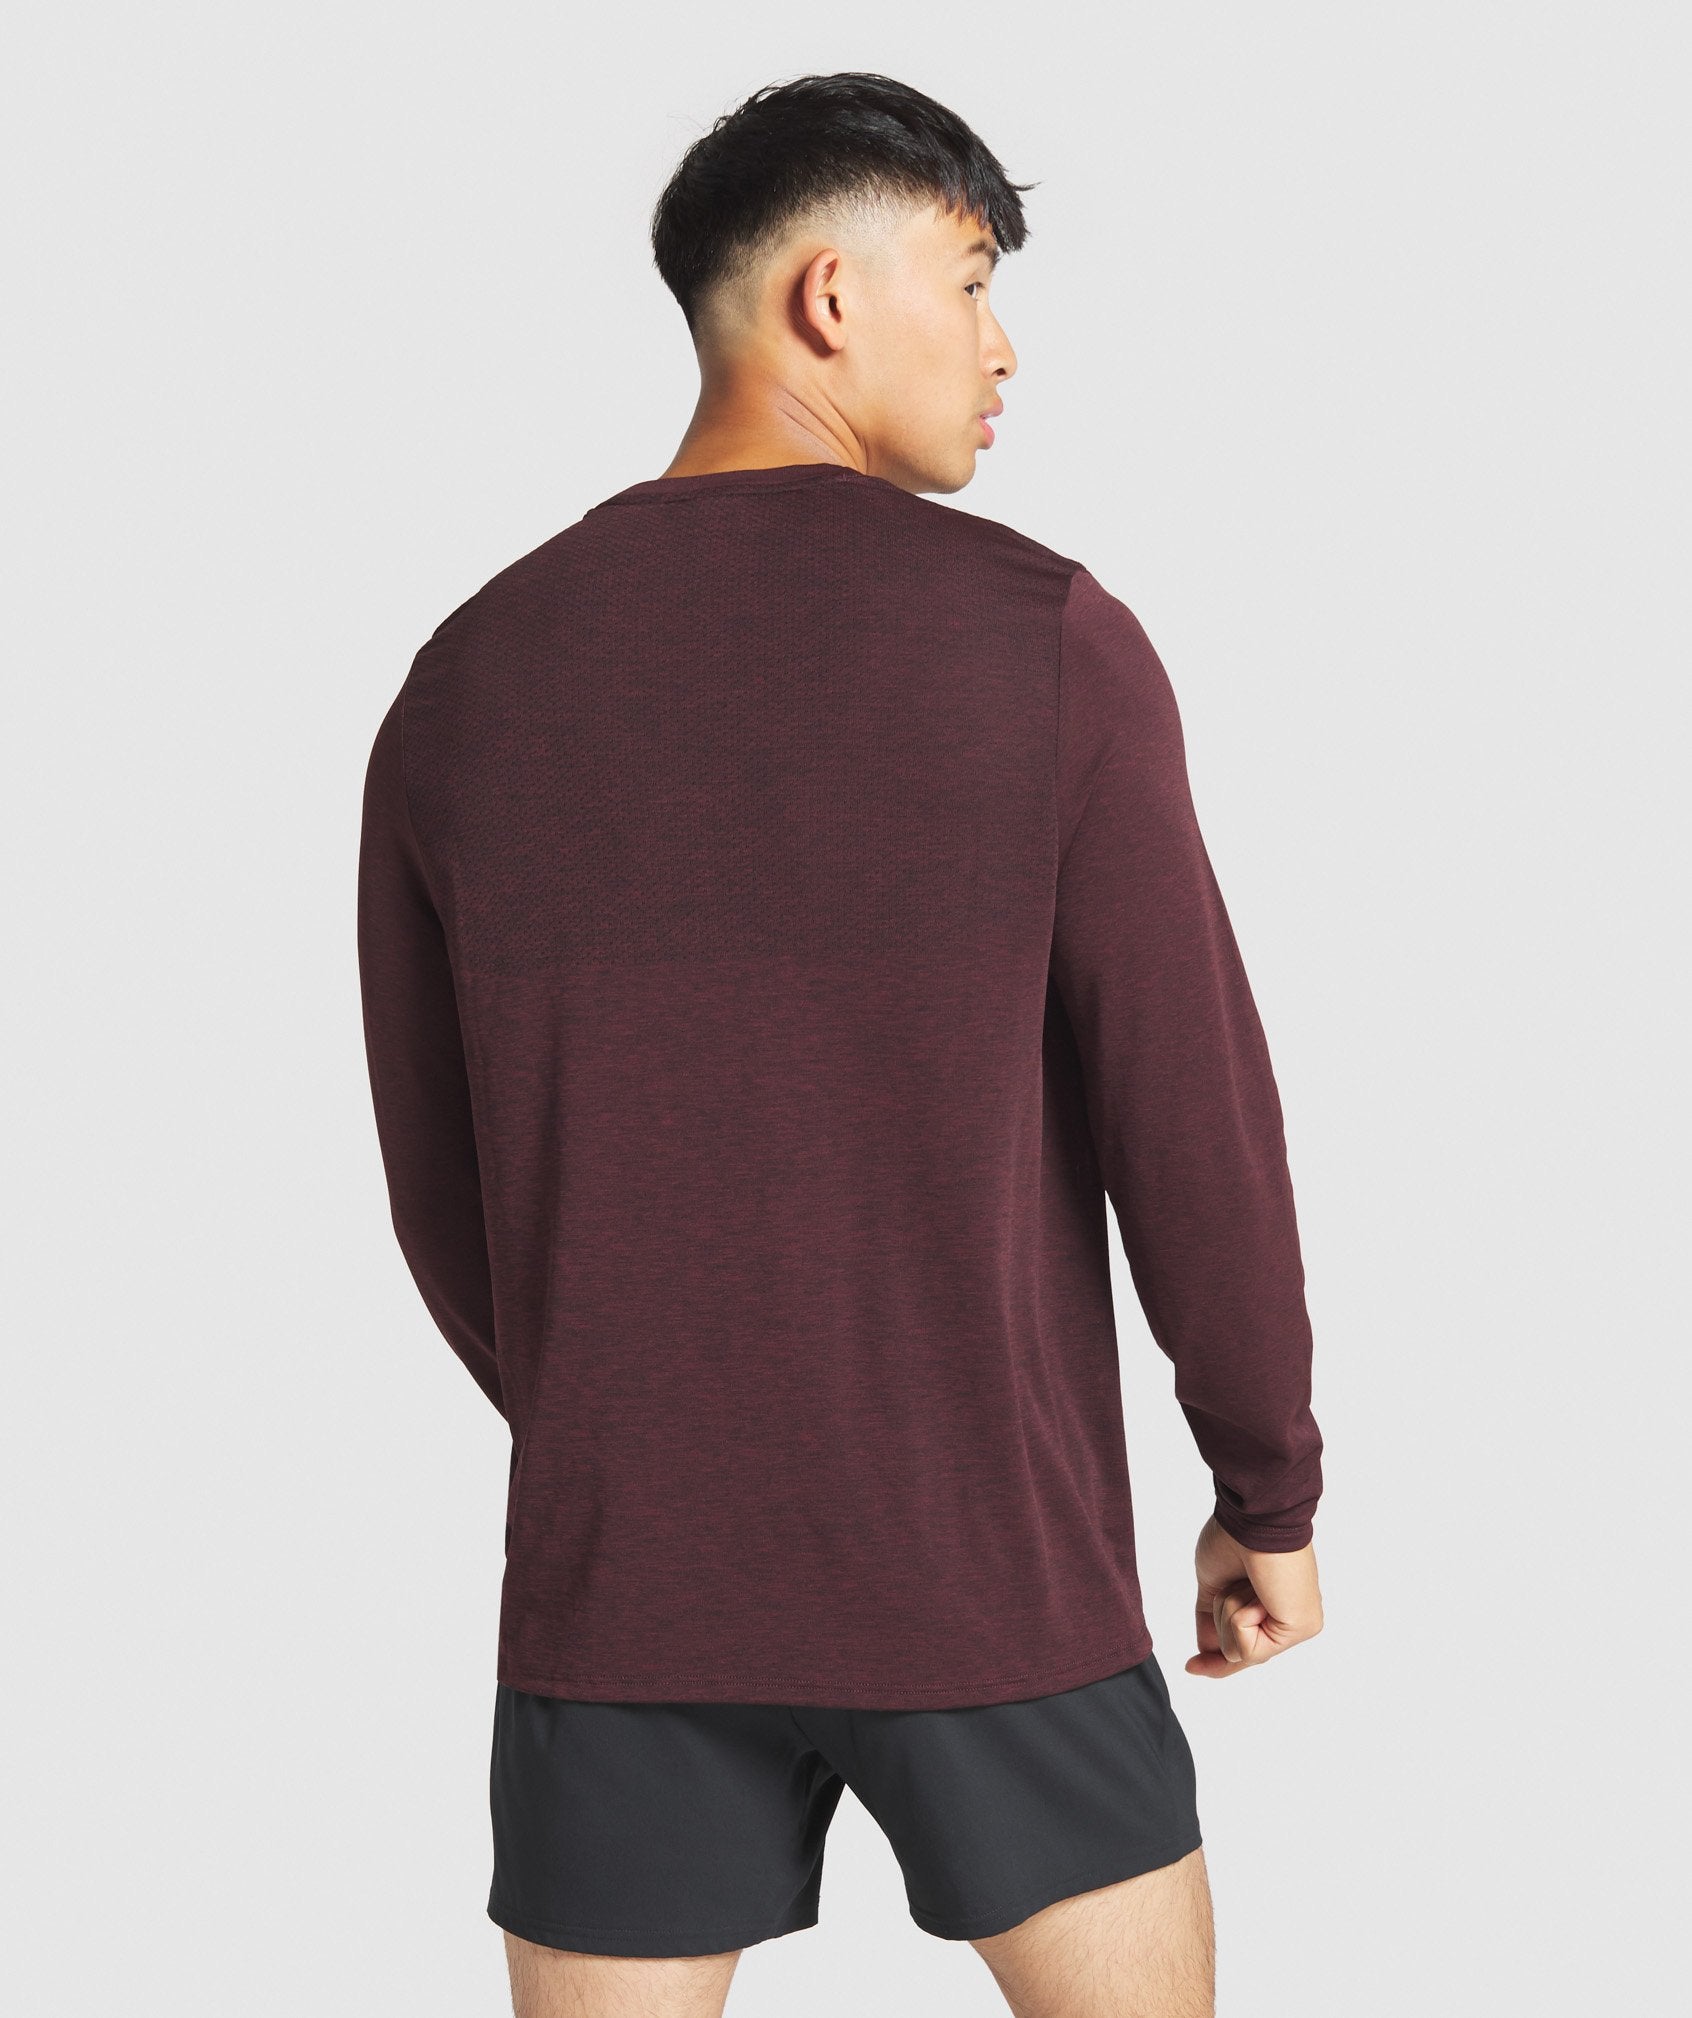 Vital Long Sleeve T-Shirt in Burgundy Marl